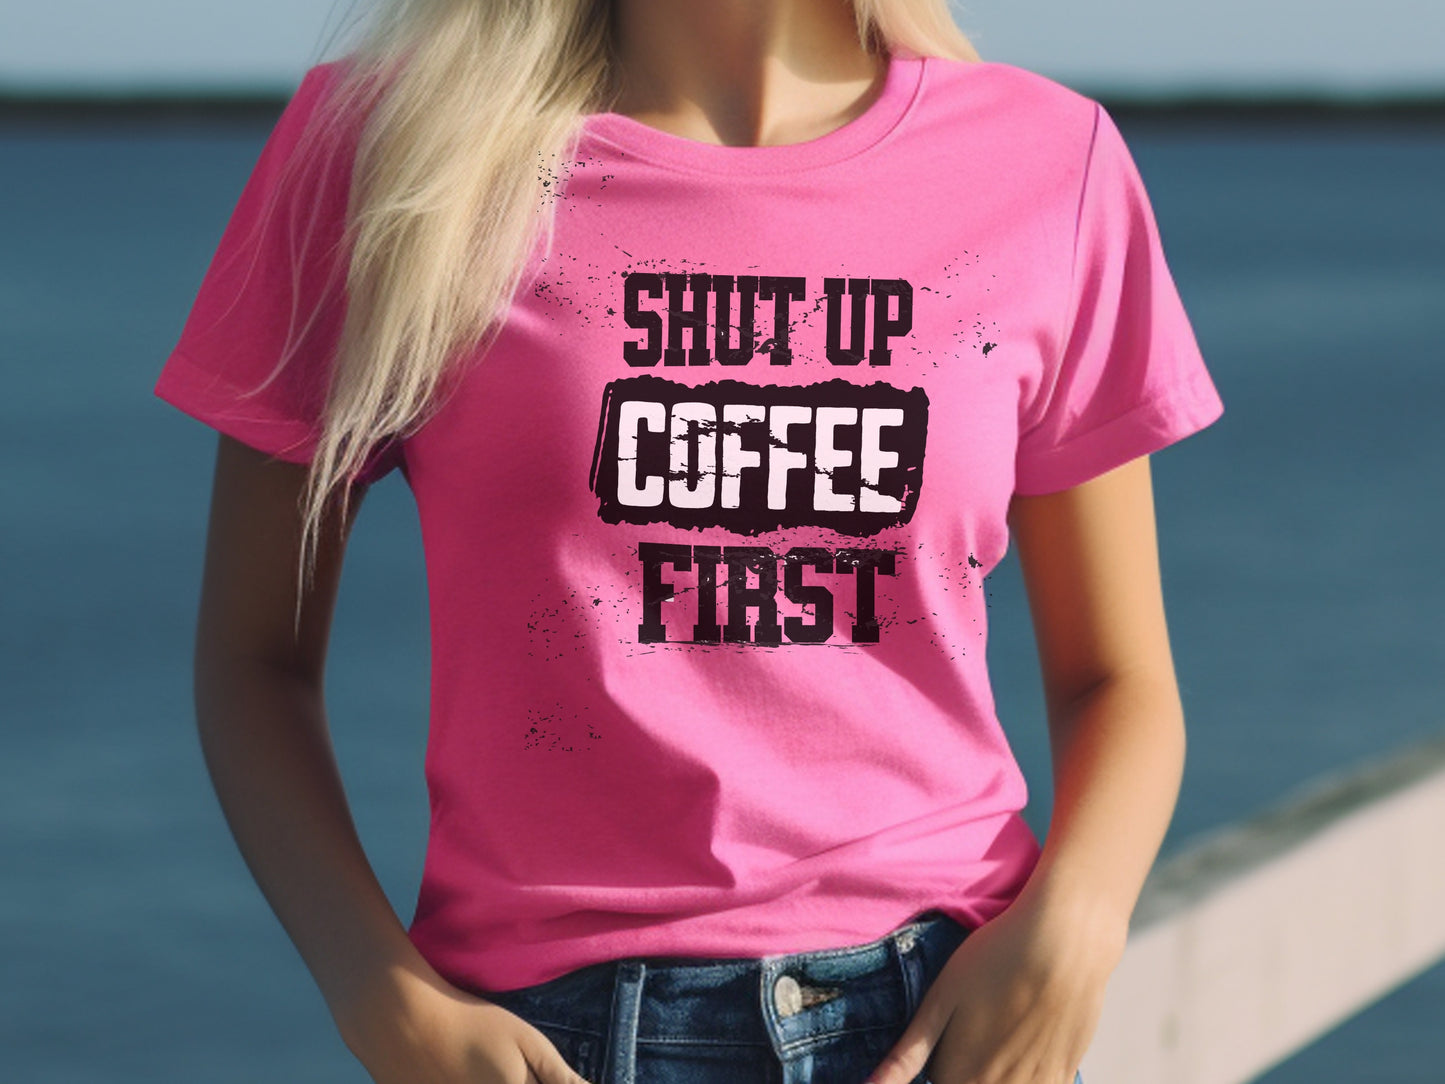 SHUT UP! COFFEE FIRST!